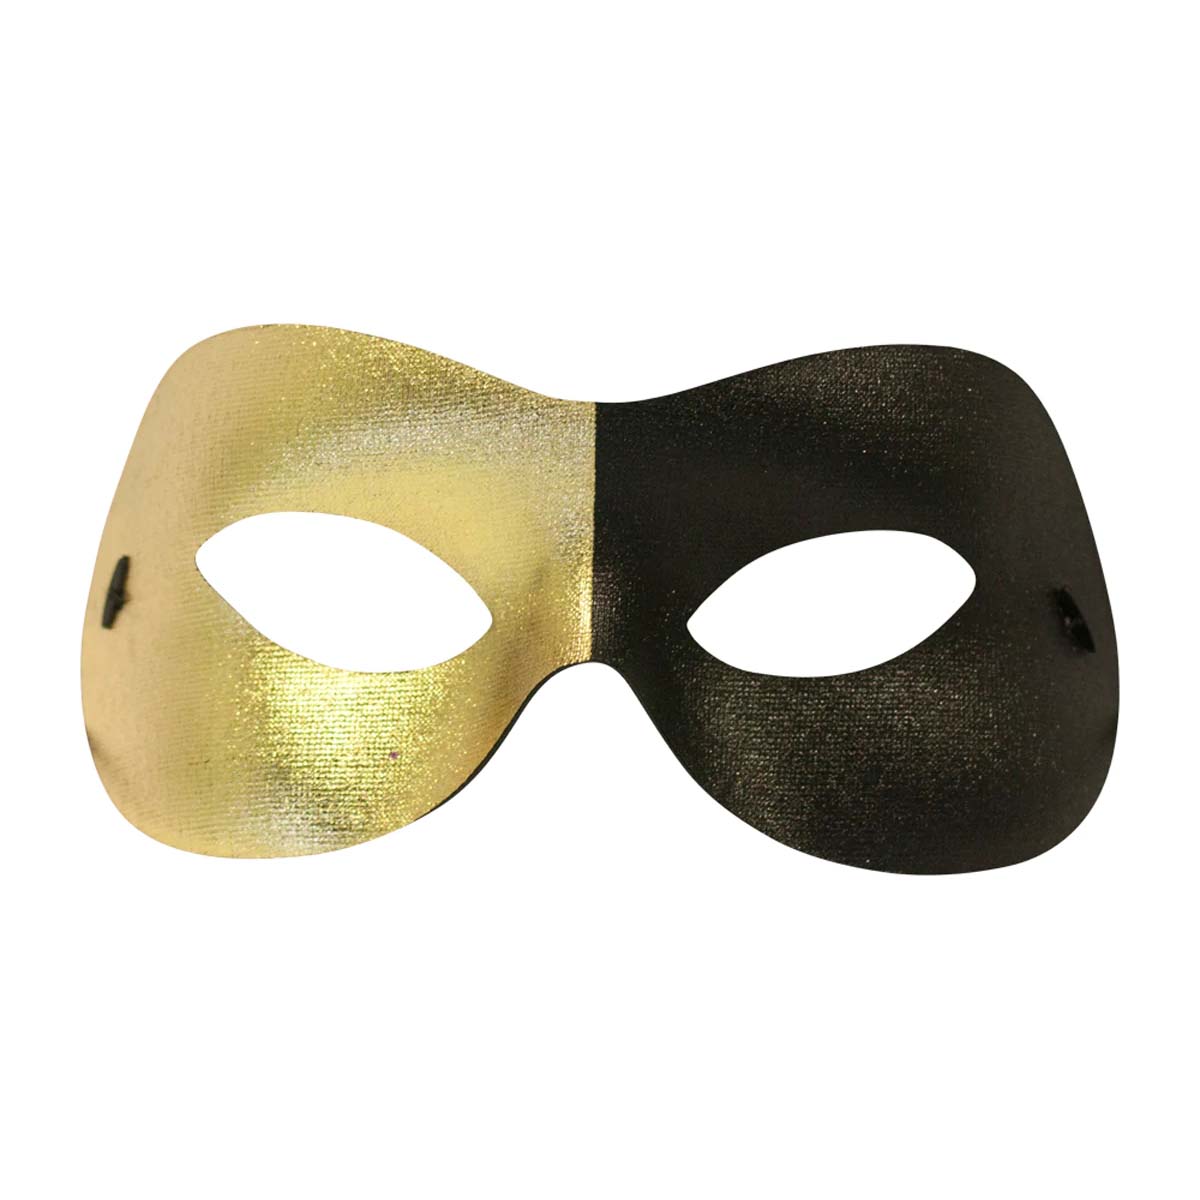 Fashion Two Tone Mask - Black/Gold